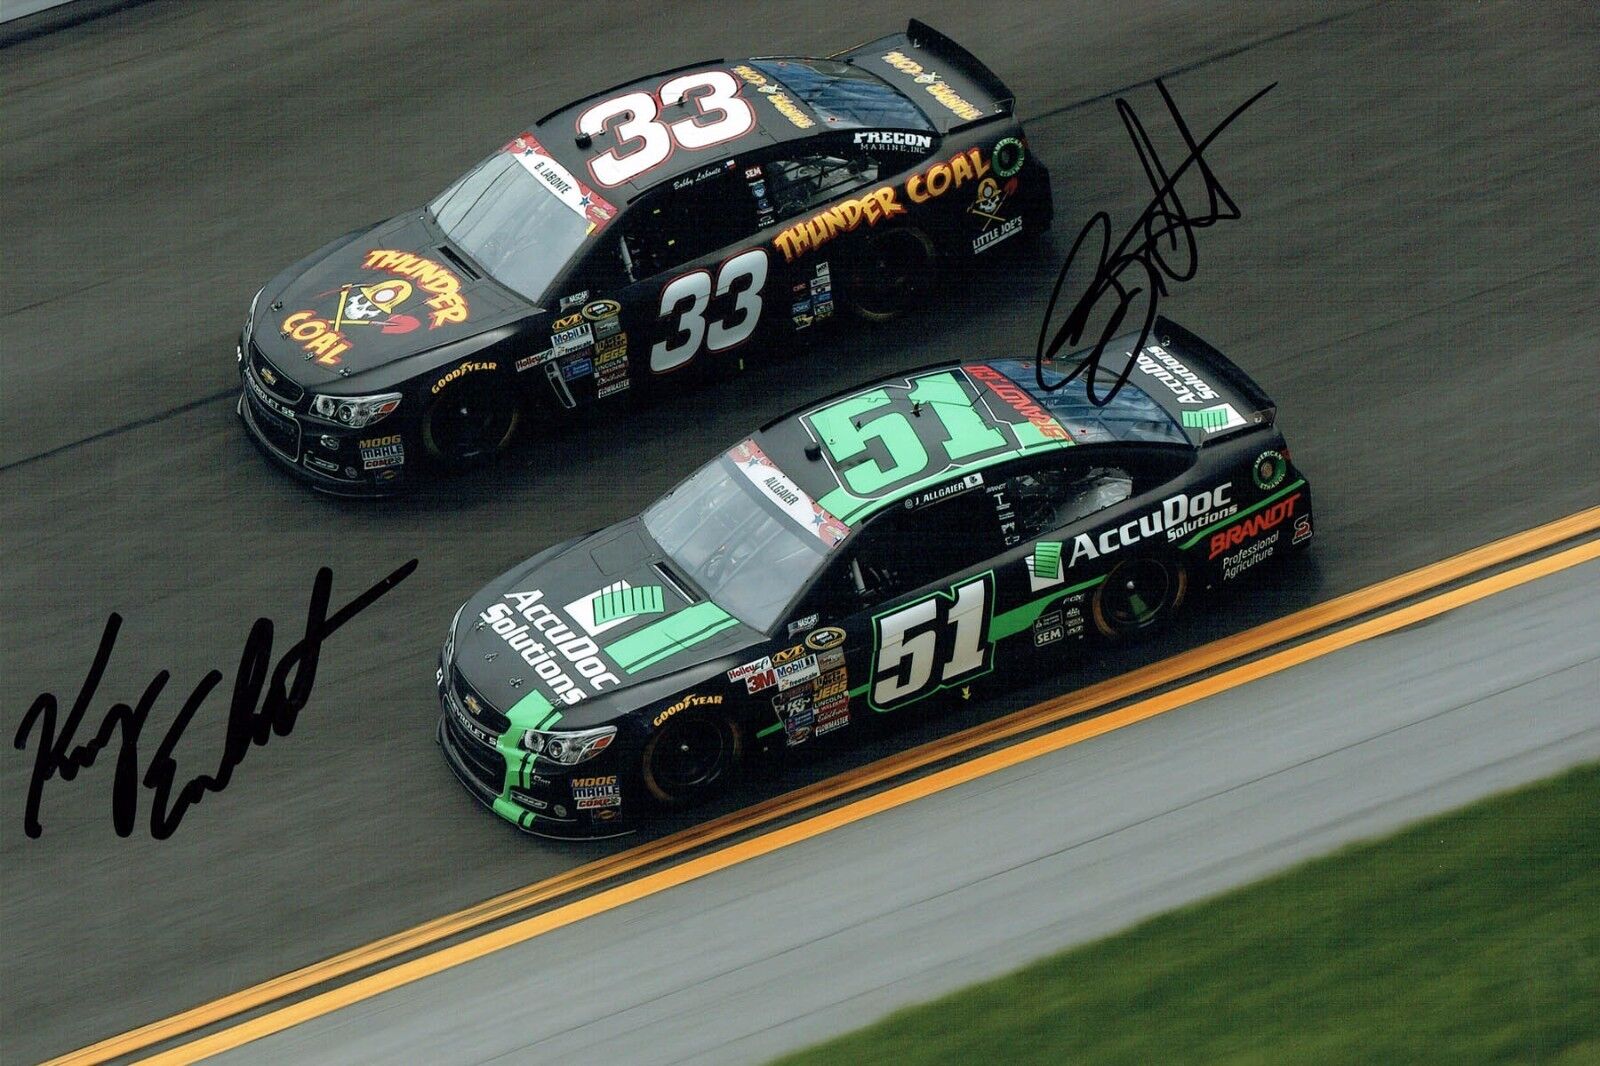 Kerry EARNHARDT & Bobby LABONTE SIGNED NASCAR Autograph 12x8 Photo Poster painting AFTAL COA